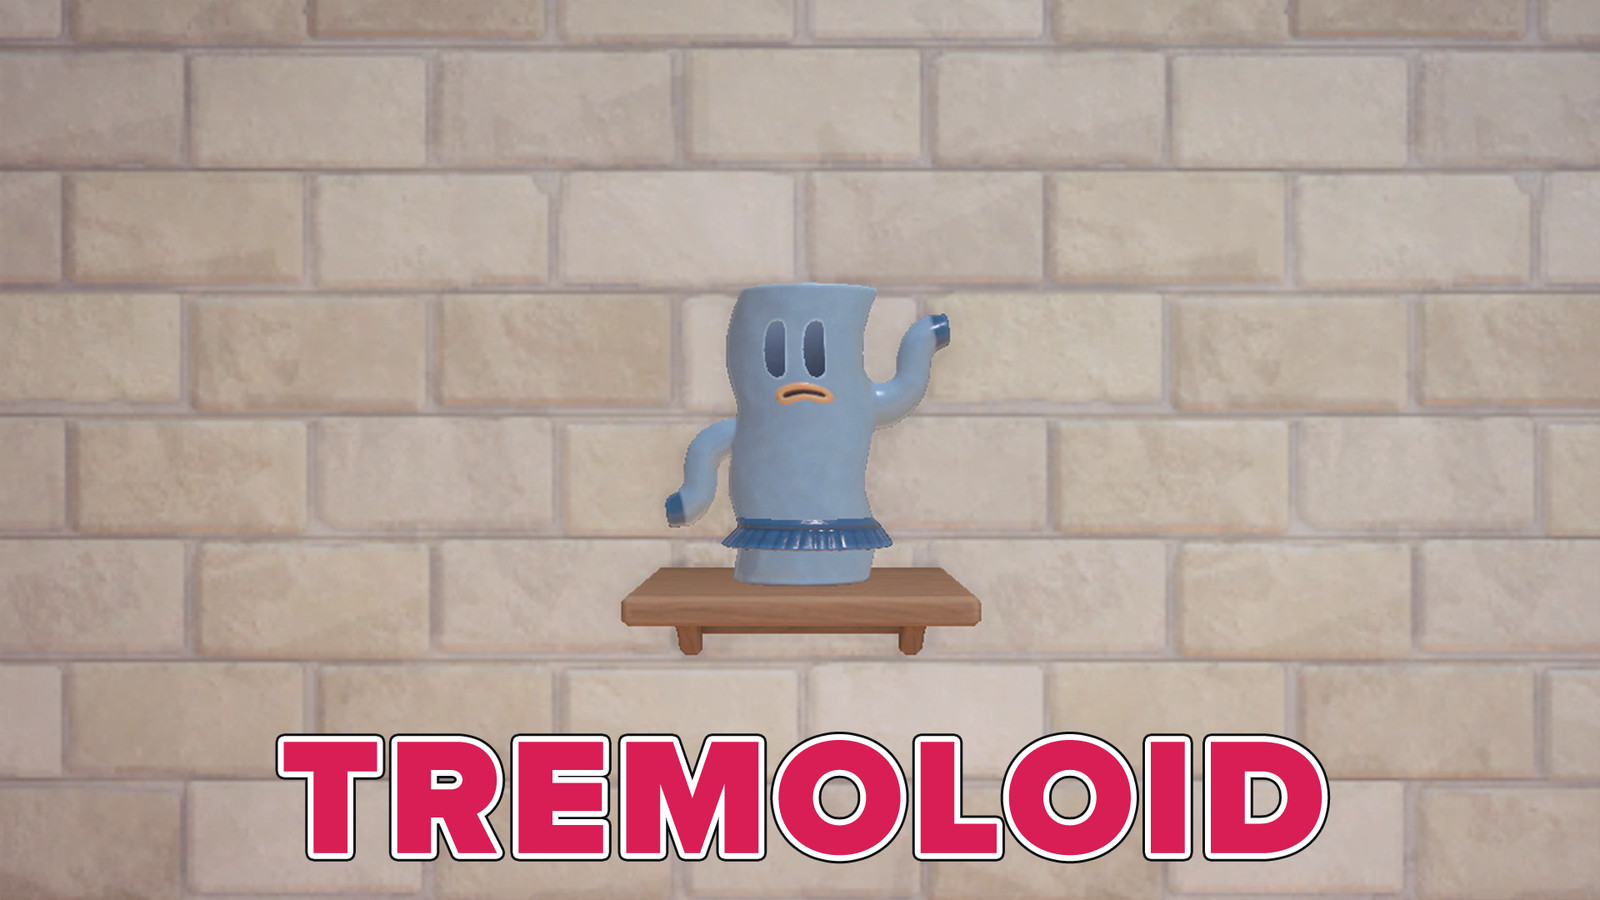 Tremoloid